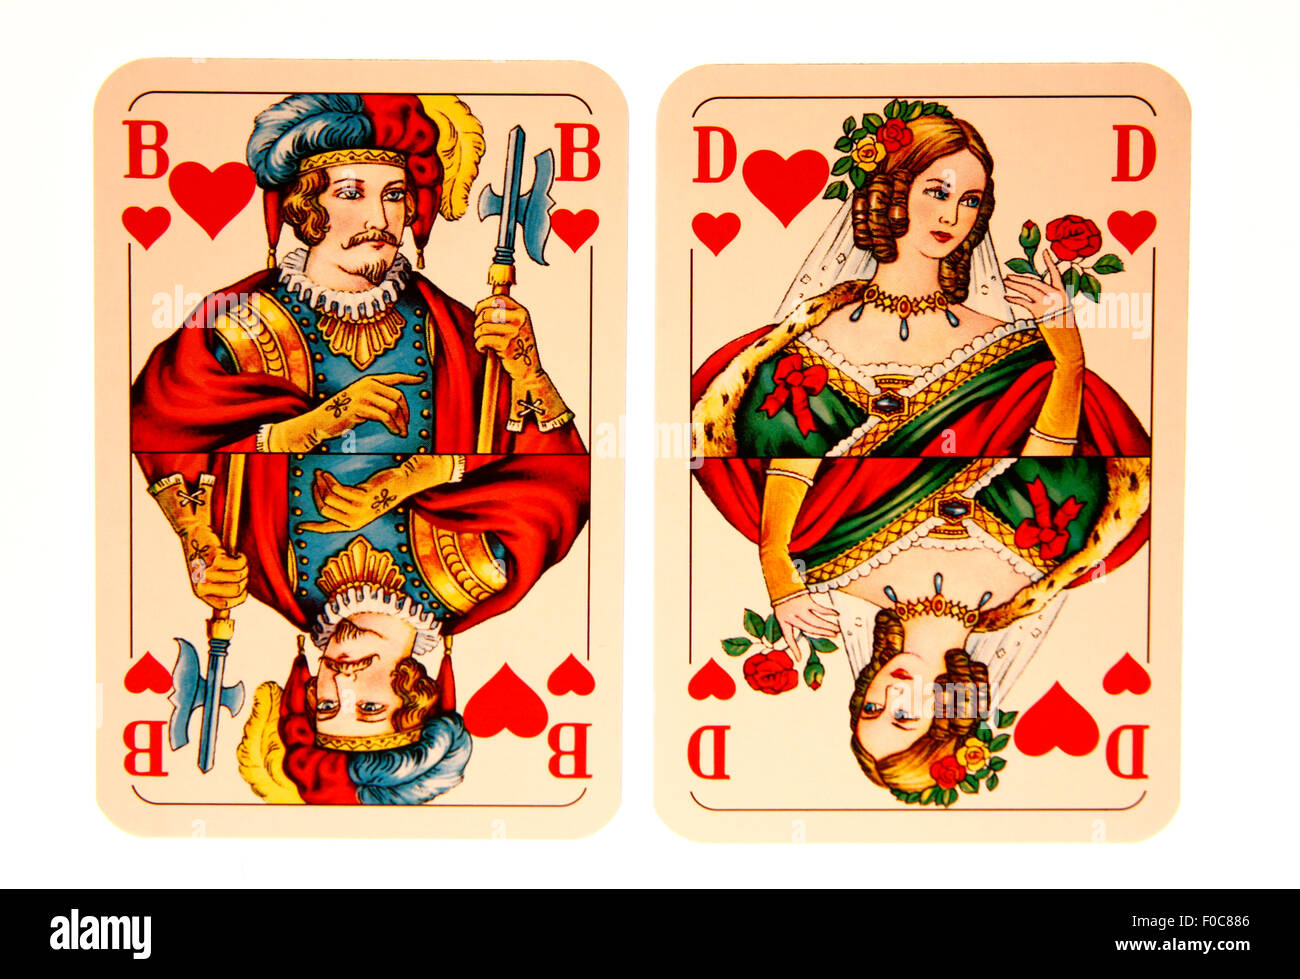 Herz Bube und Herz Dame - Symbolbild Kartenspiel/ jeu de cartes. Banque D'Images